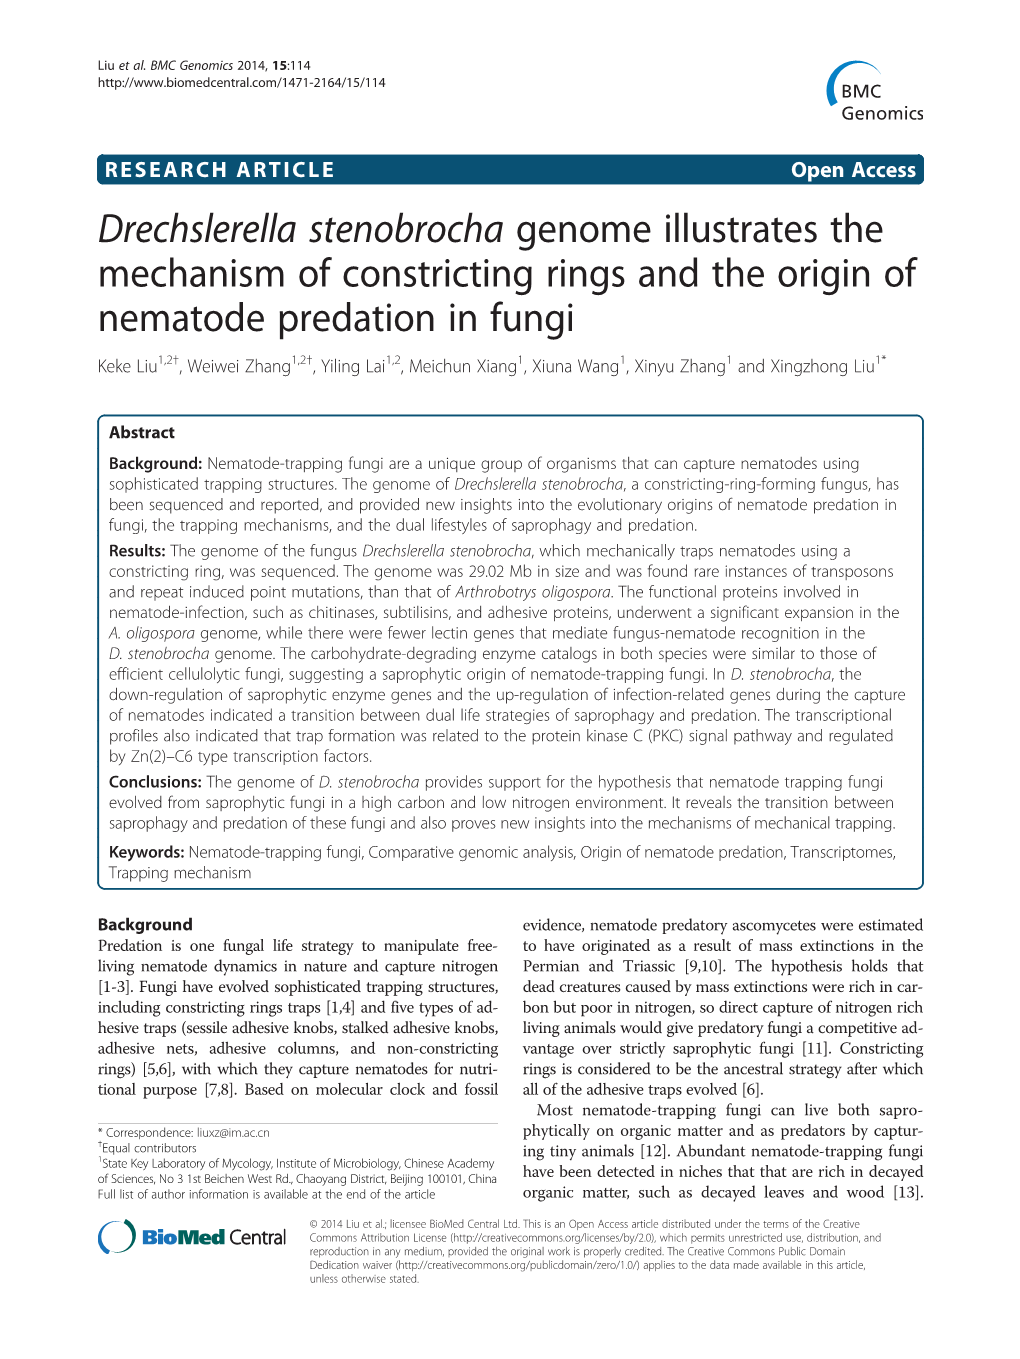 Drechslerella Stenobrocha Genome Illustrates the Mechanism Of